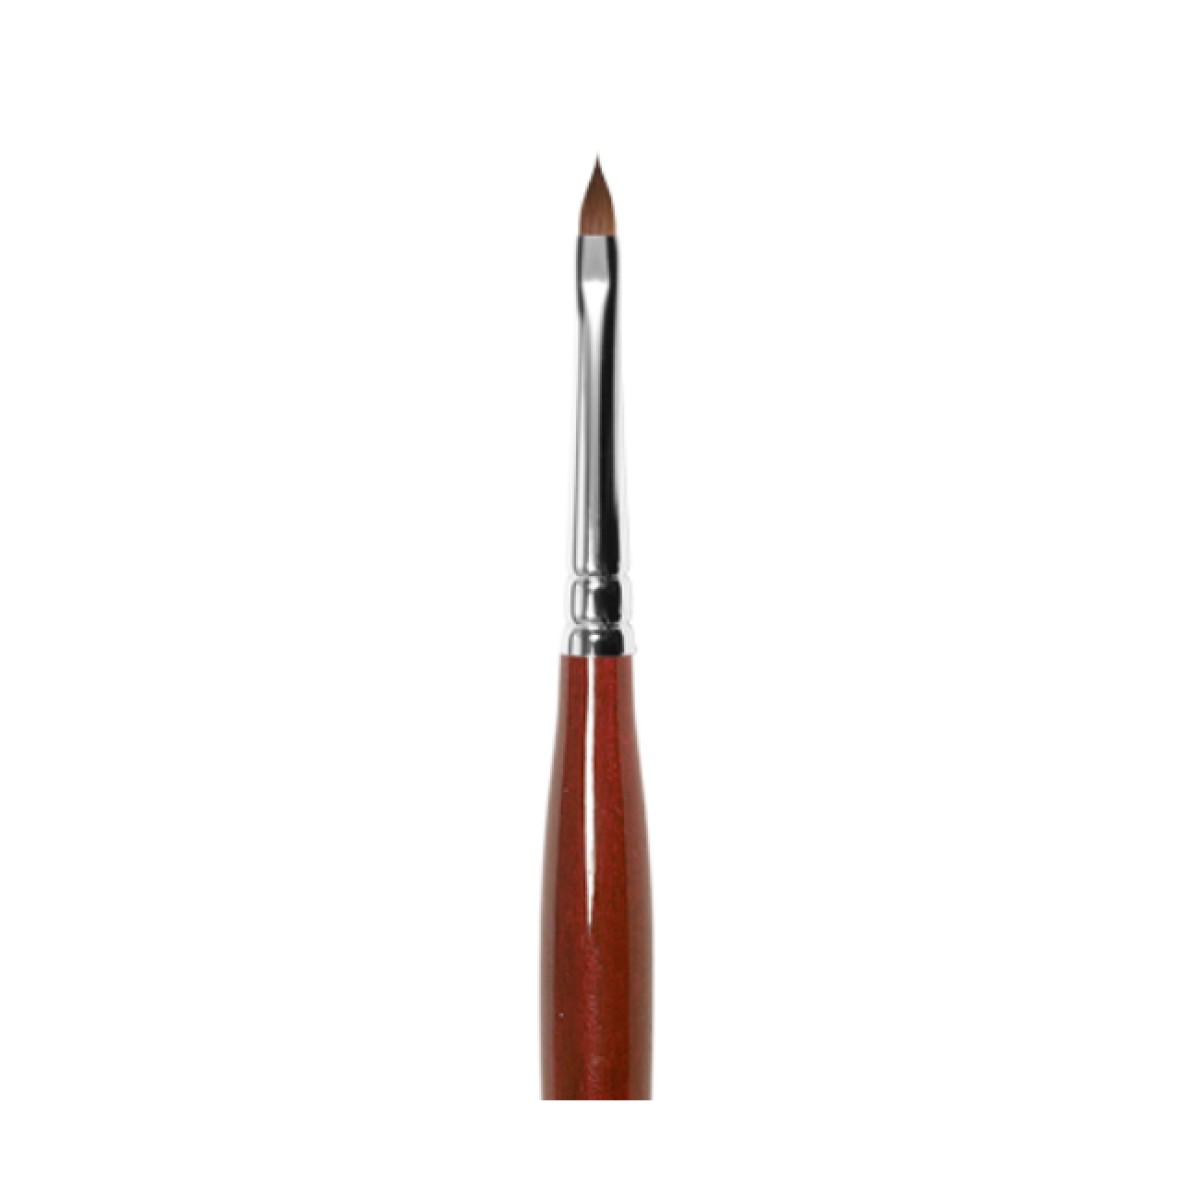 Pensula de unghii Roubloff Kolinsky, AK93R Nr.3, din par natural | Savy Professional